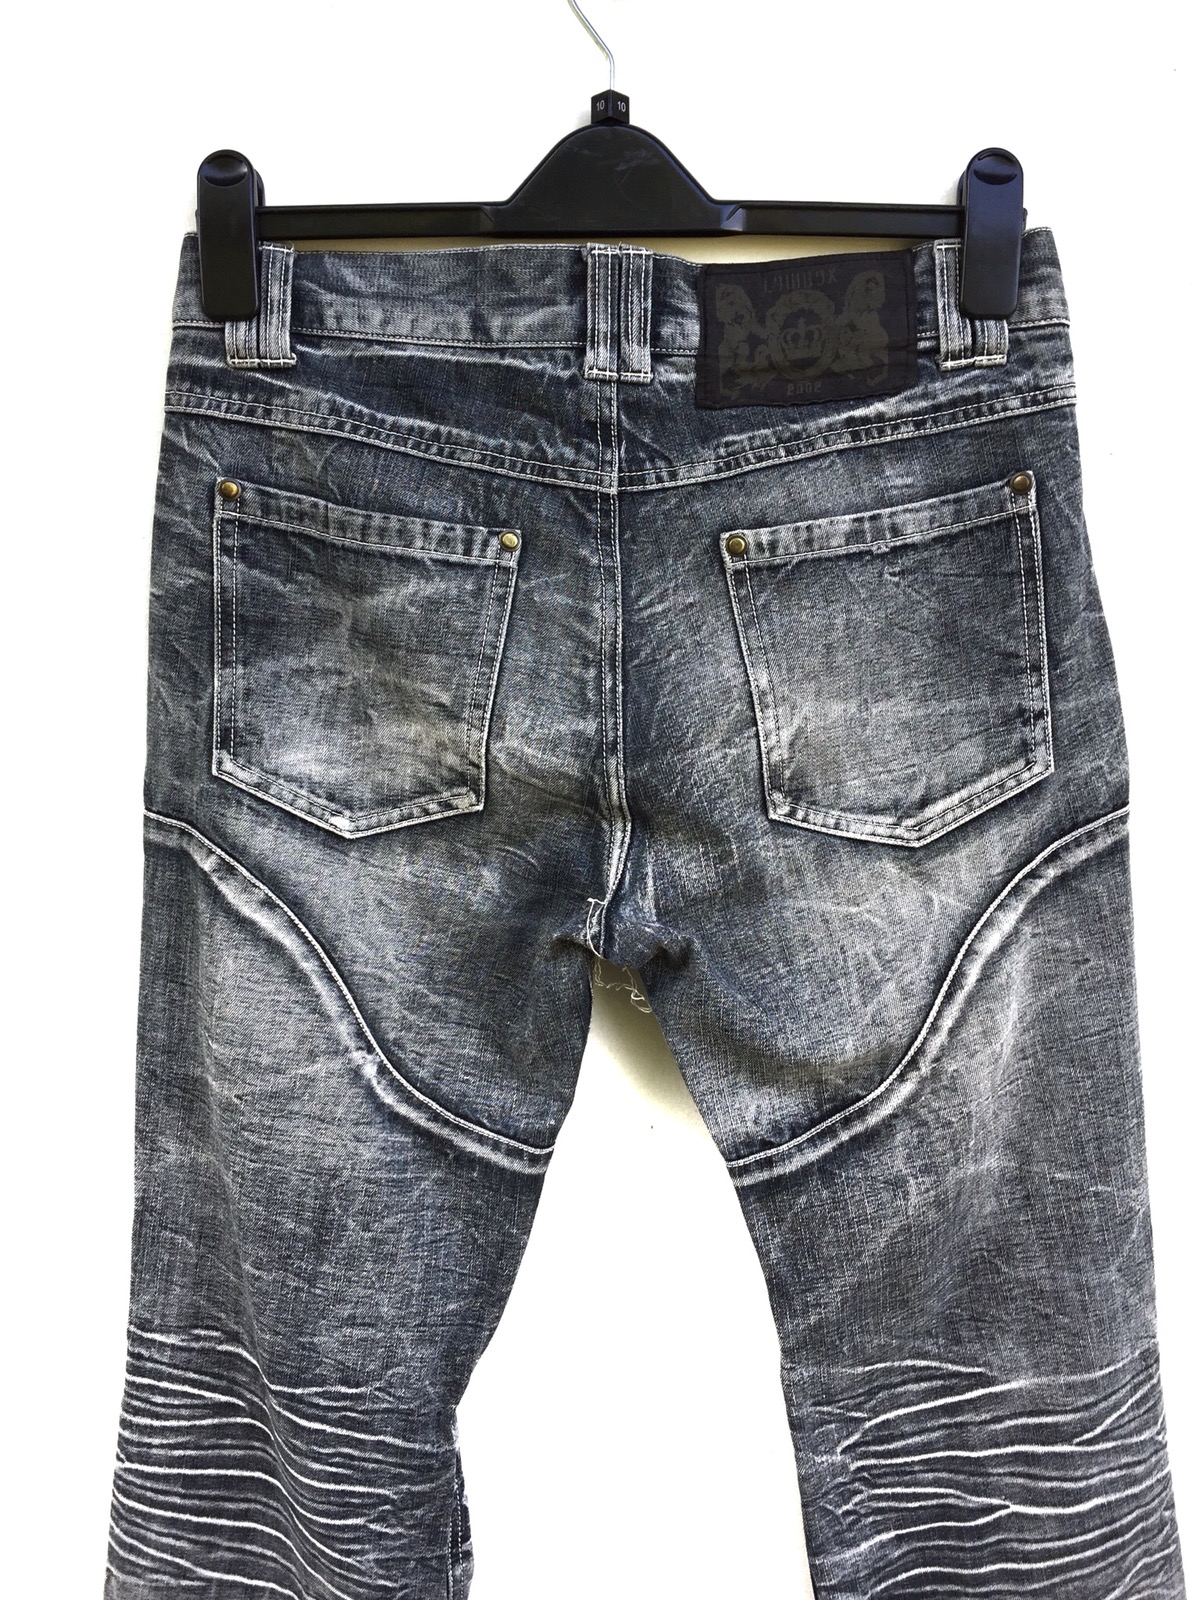 Distressed Denim - Japanese Brand Lowbox Distressed Jeans Number Nine Style